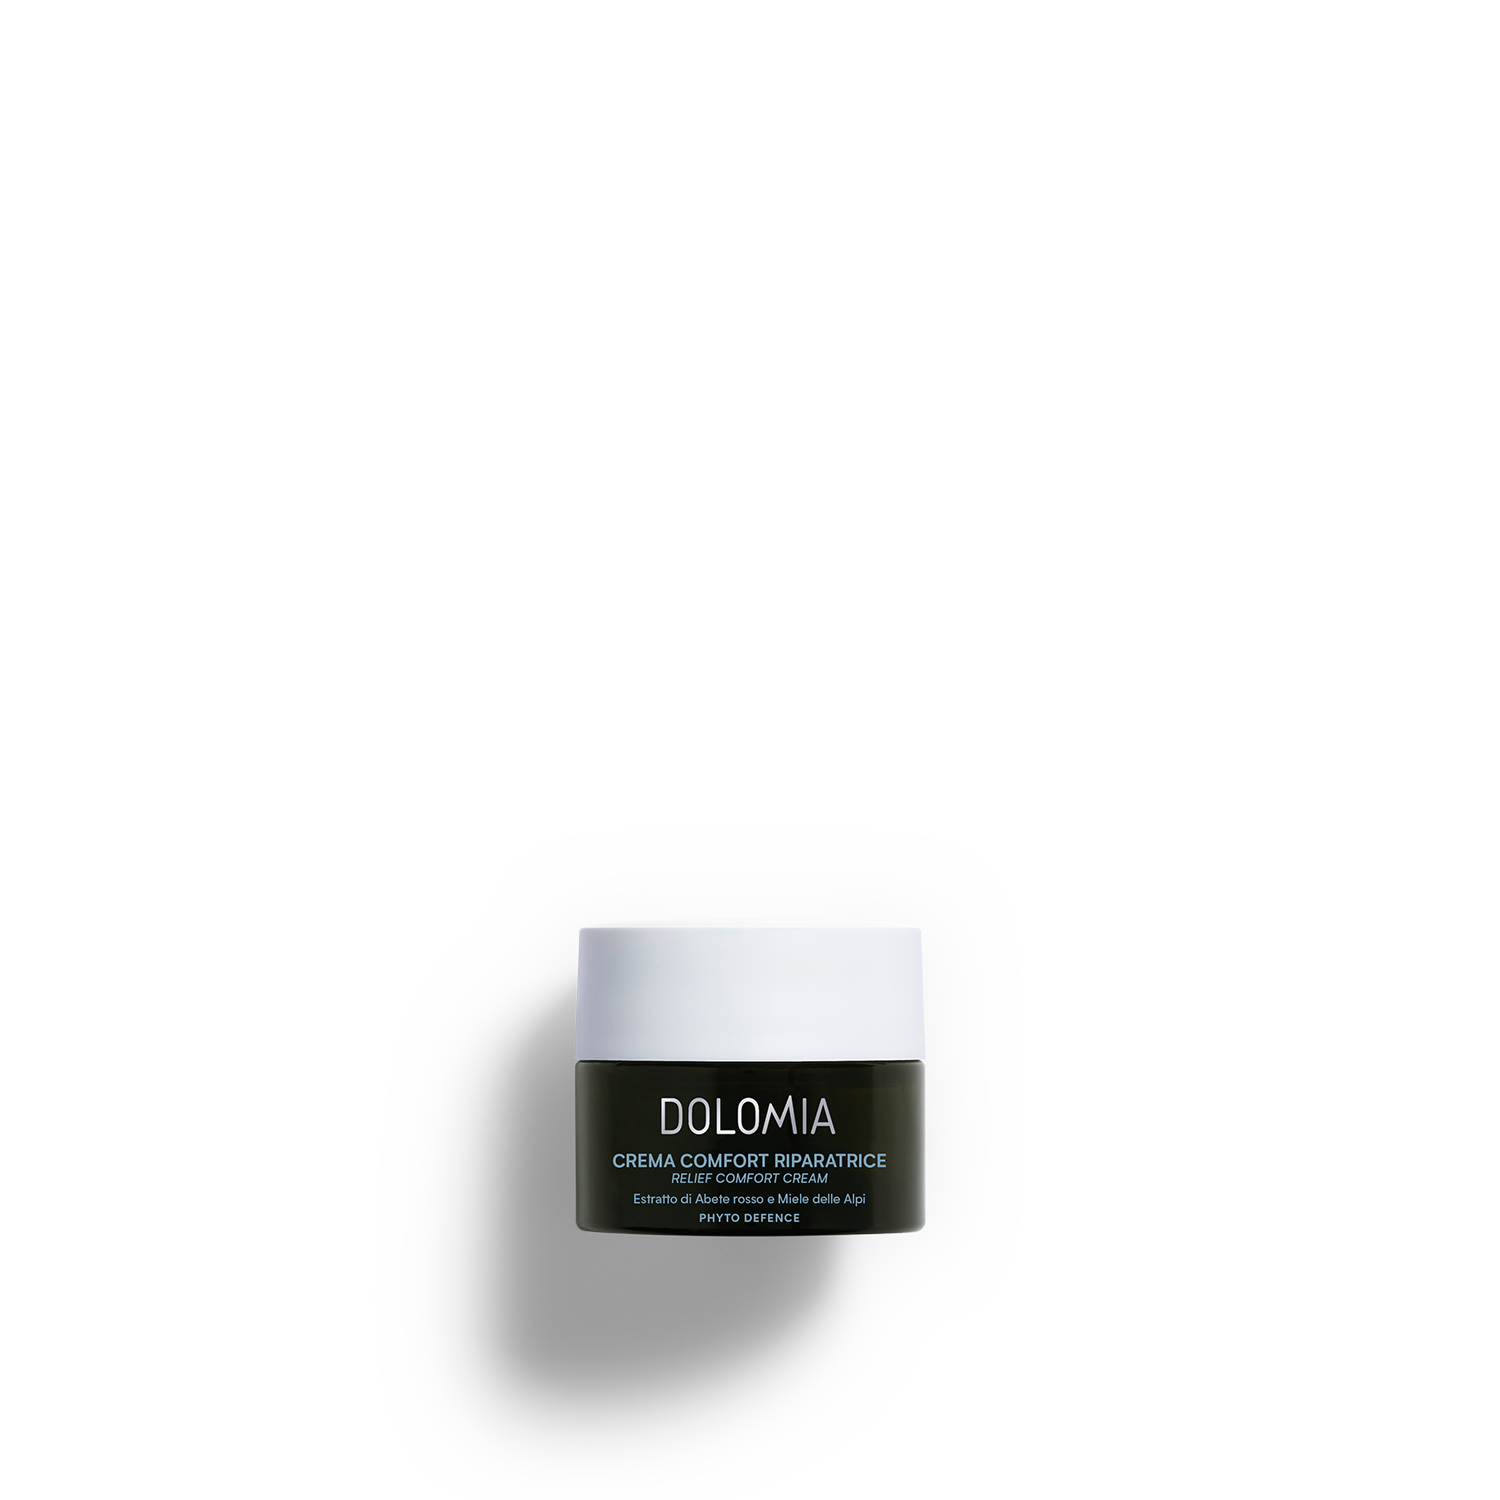 Dolomia Crema Comfort Riparatrice 50ml